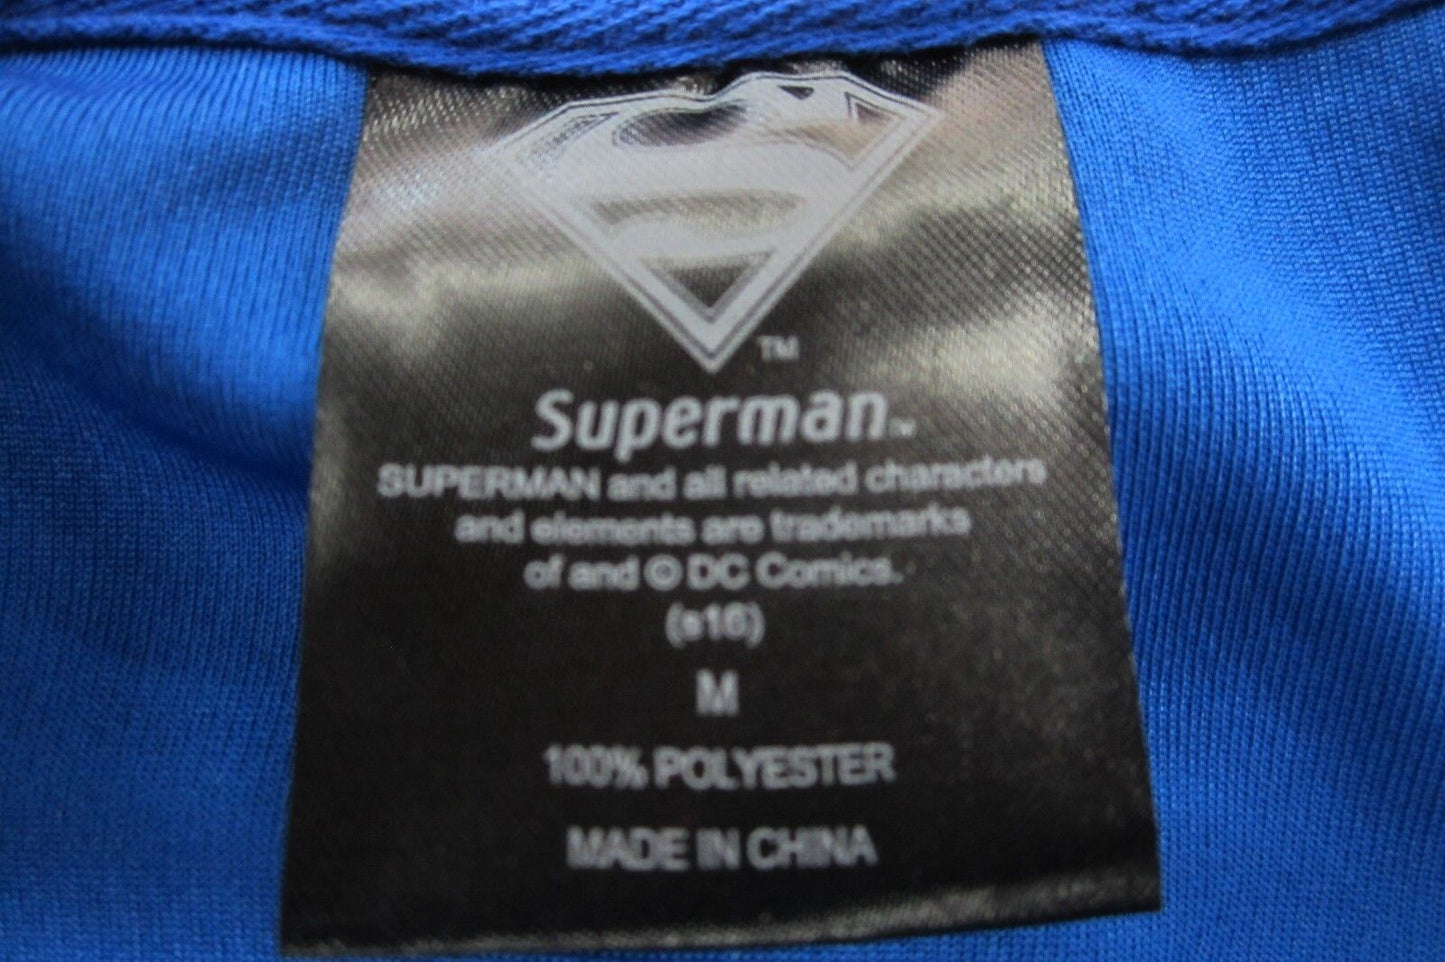 "NEW" SUPERMAN Blue Football Jersey Men's Shirt MED DC Comics #00 Superhero Poly